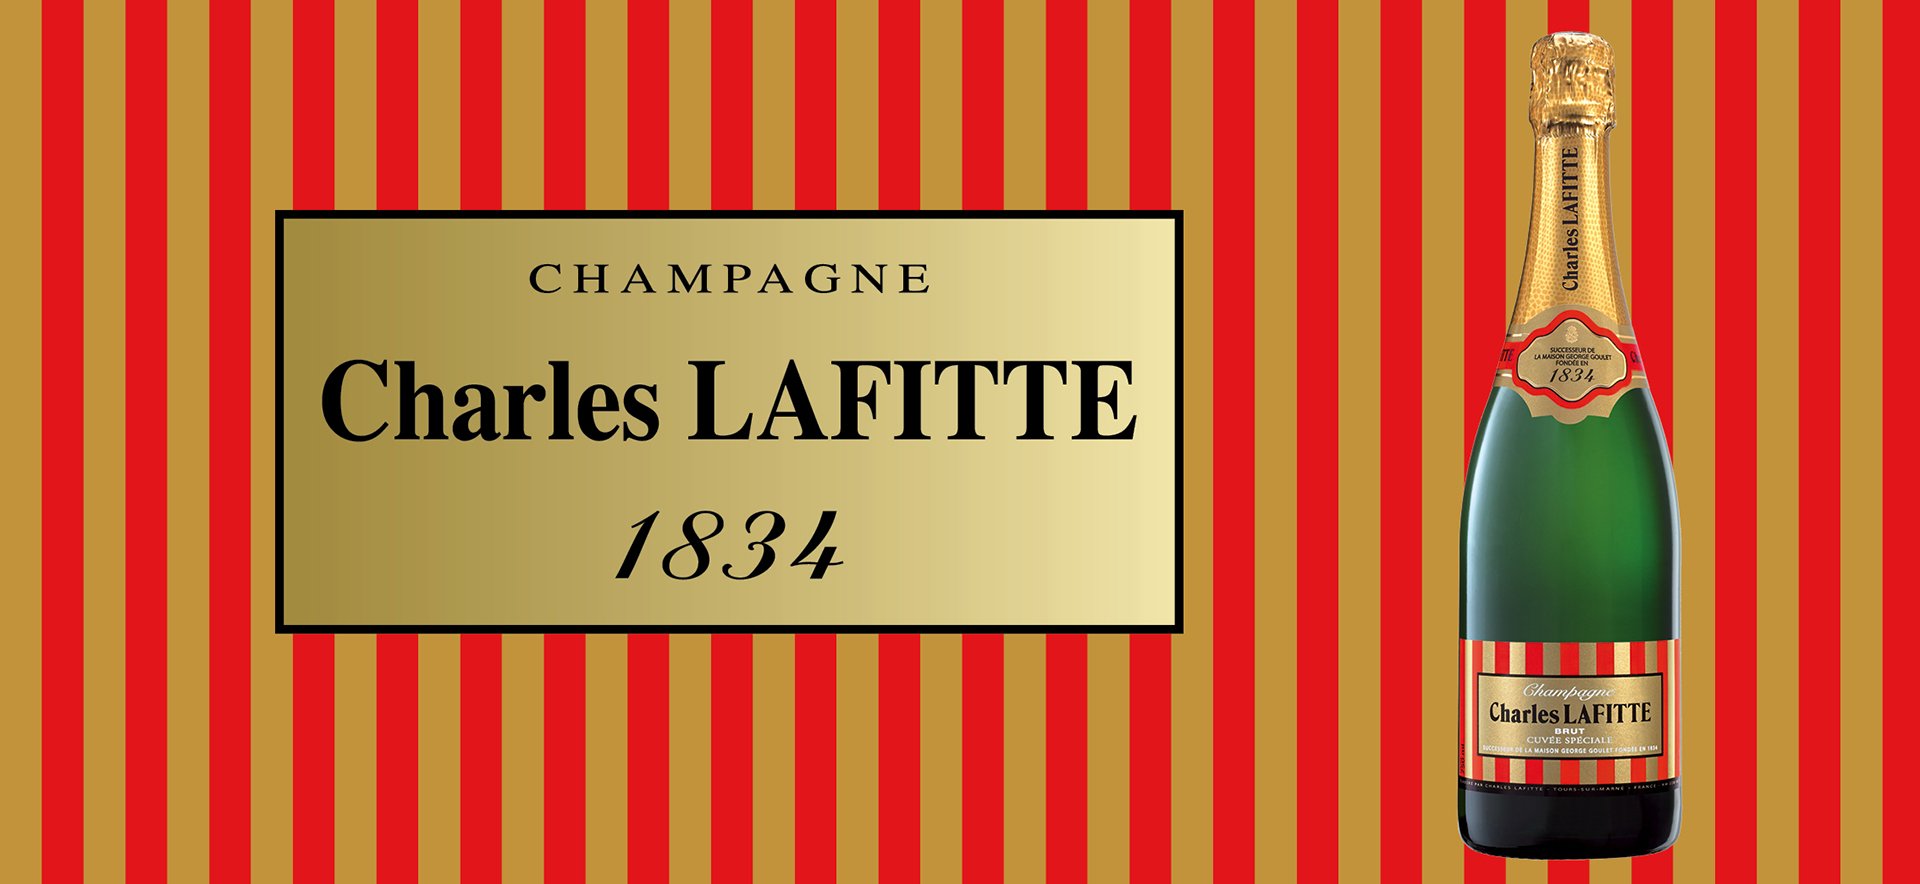 Champagne Charles LAFITTE 1834